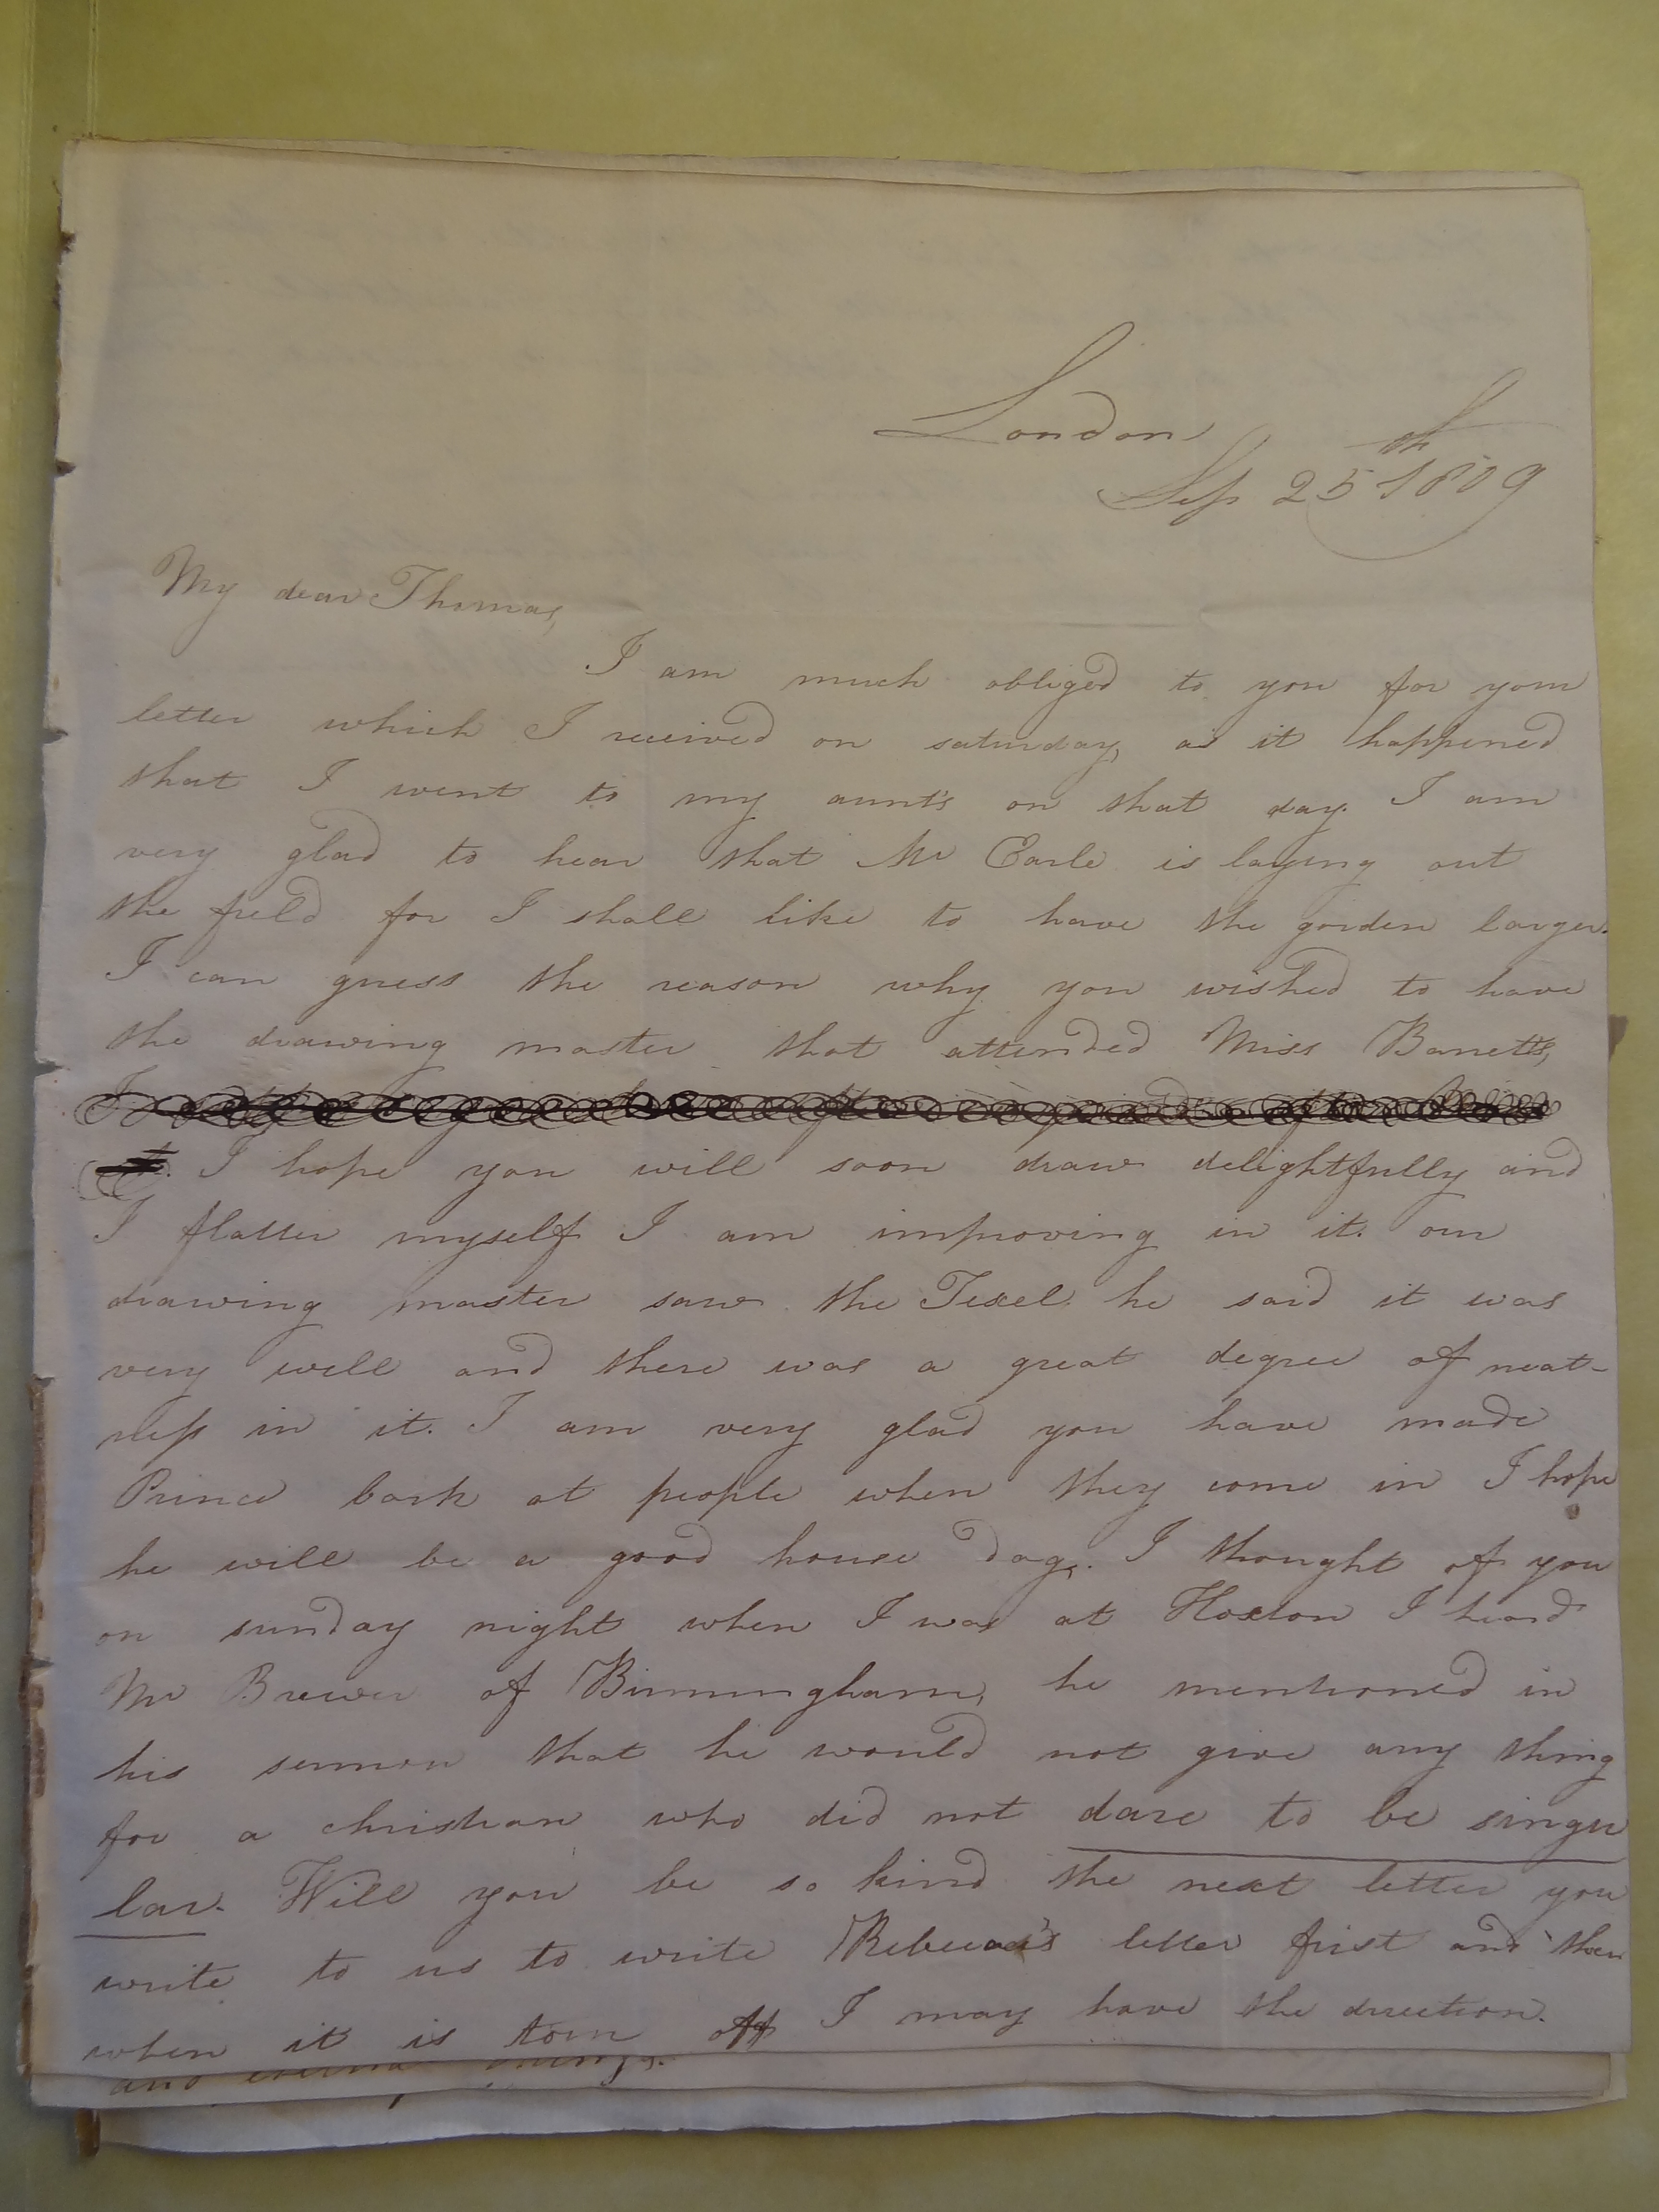 Image #1 of letter: Rebekah Hope and Rebekah Stratten to Thomas Bateman Junior, 25 September 1809